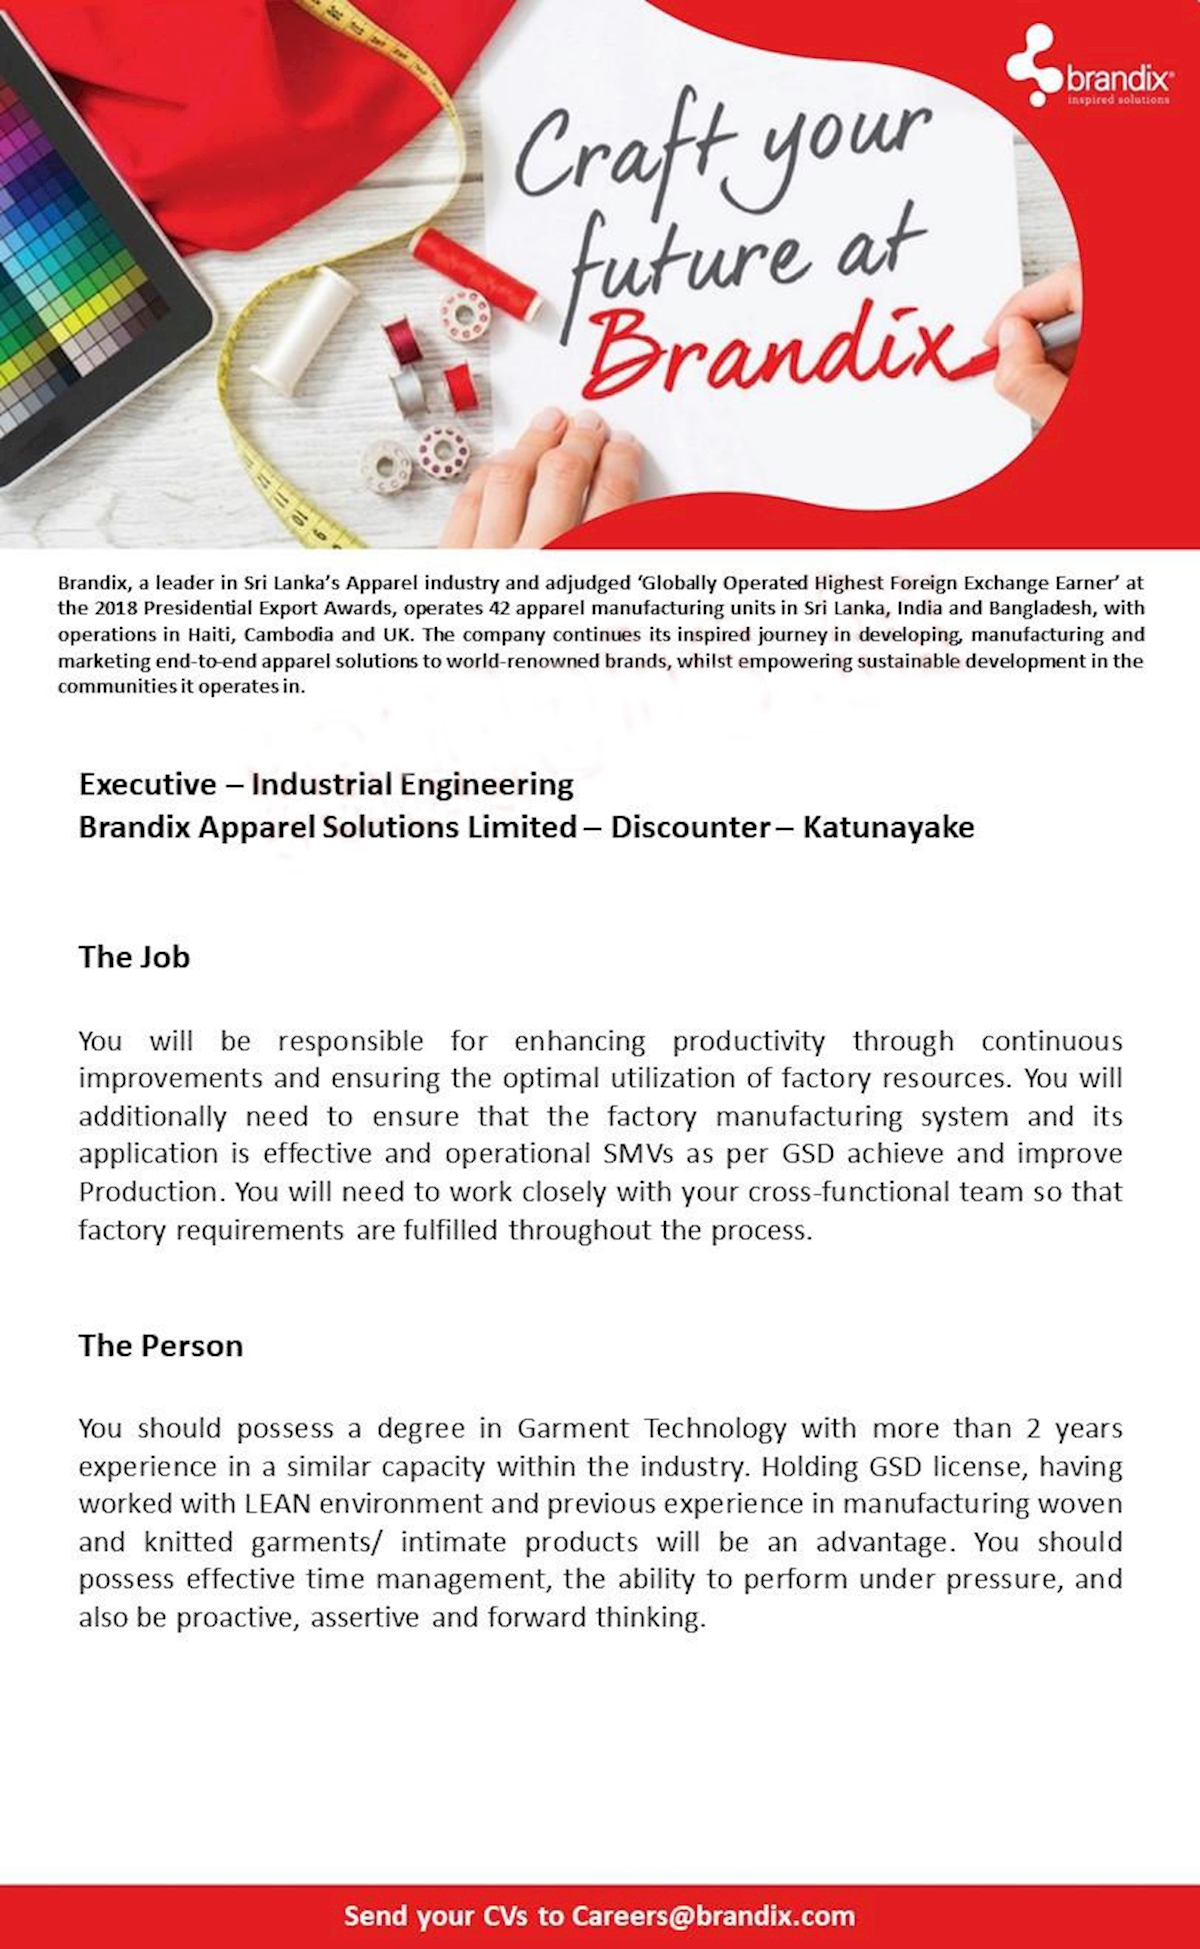 Executive - Industrial Engineering